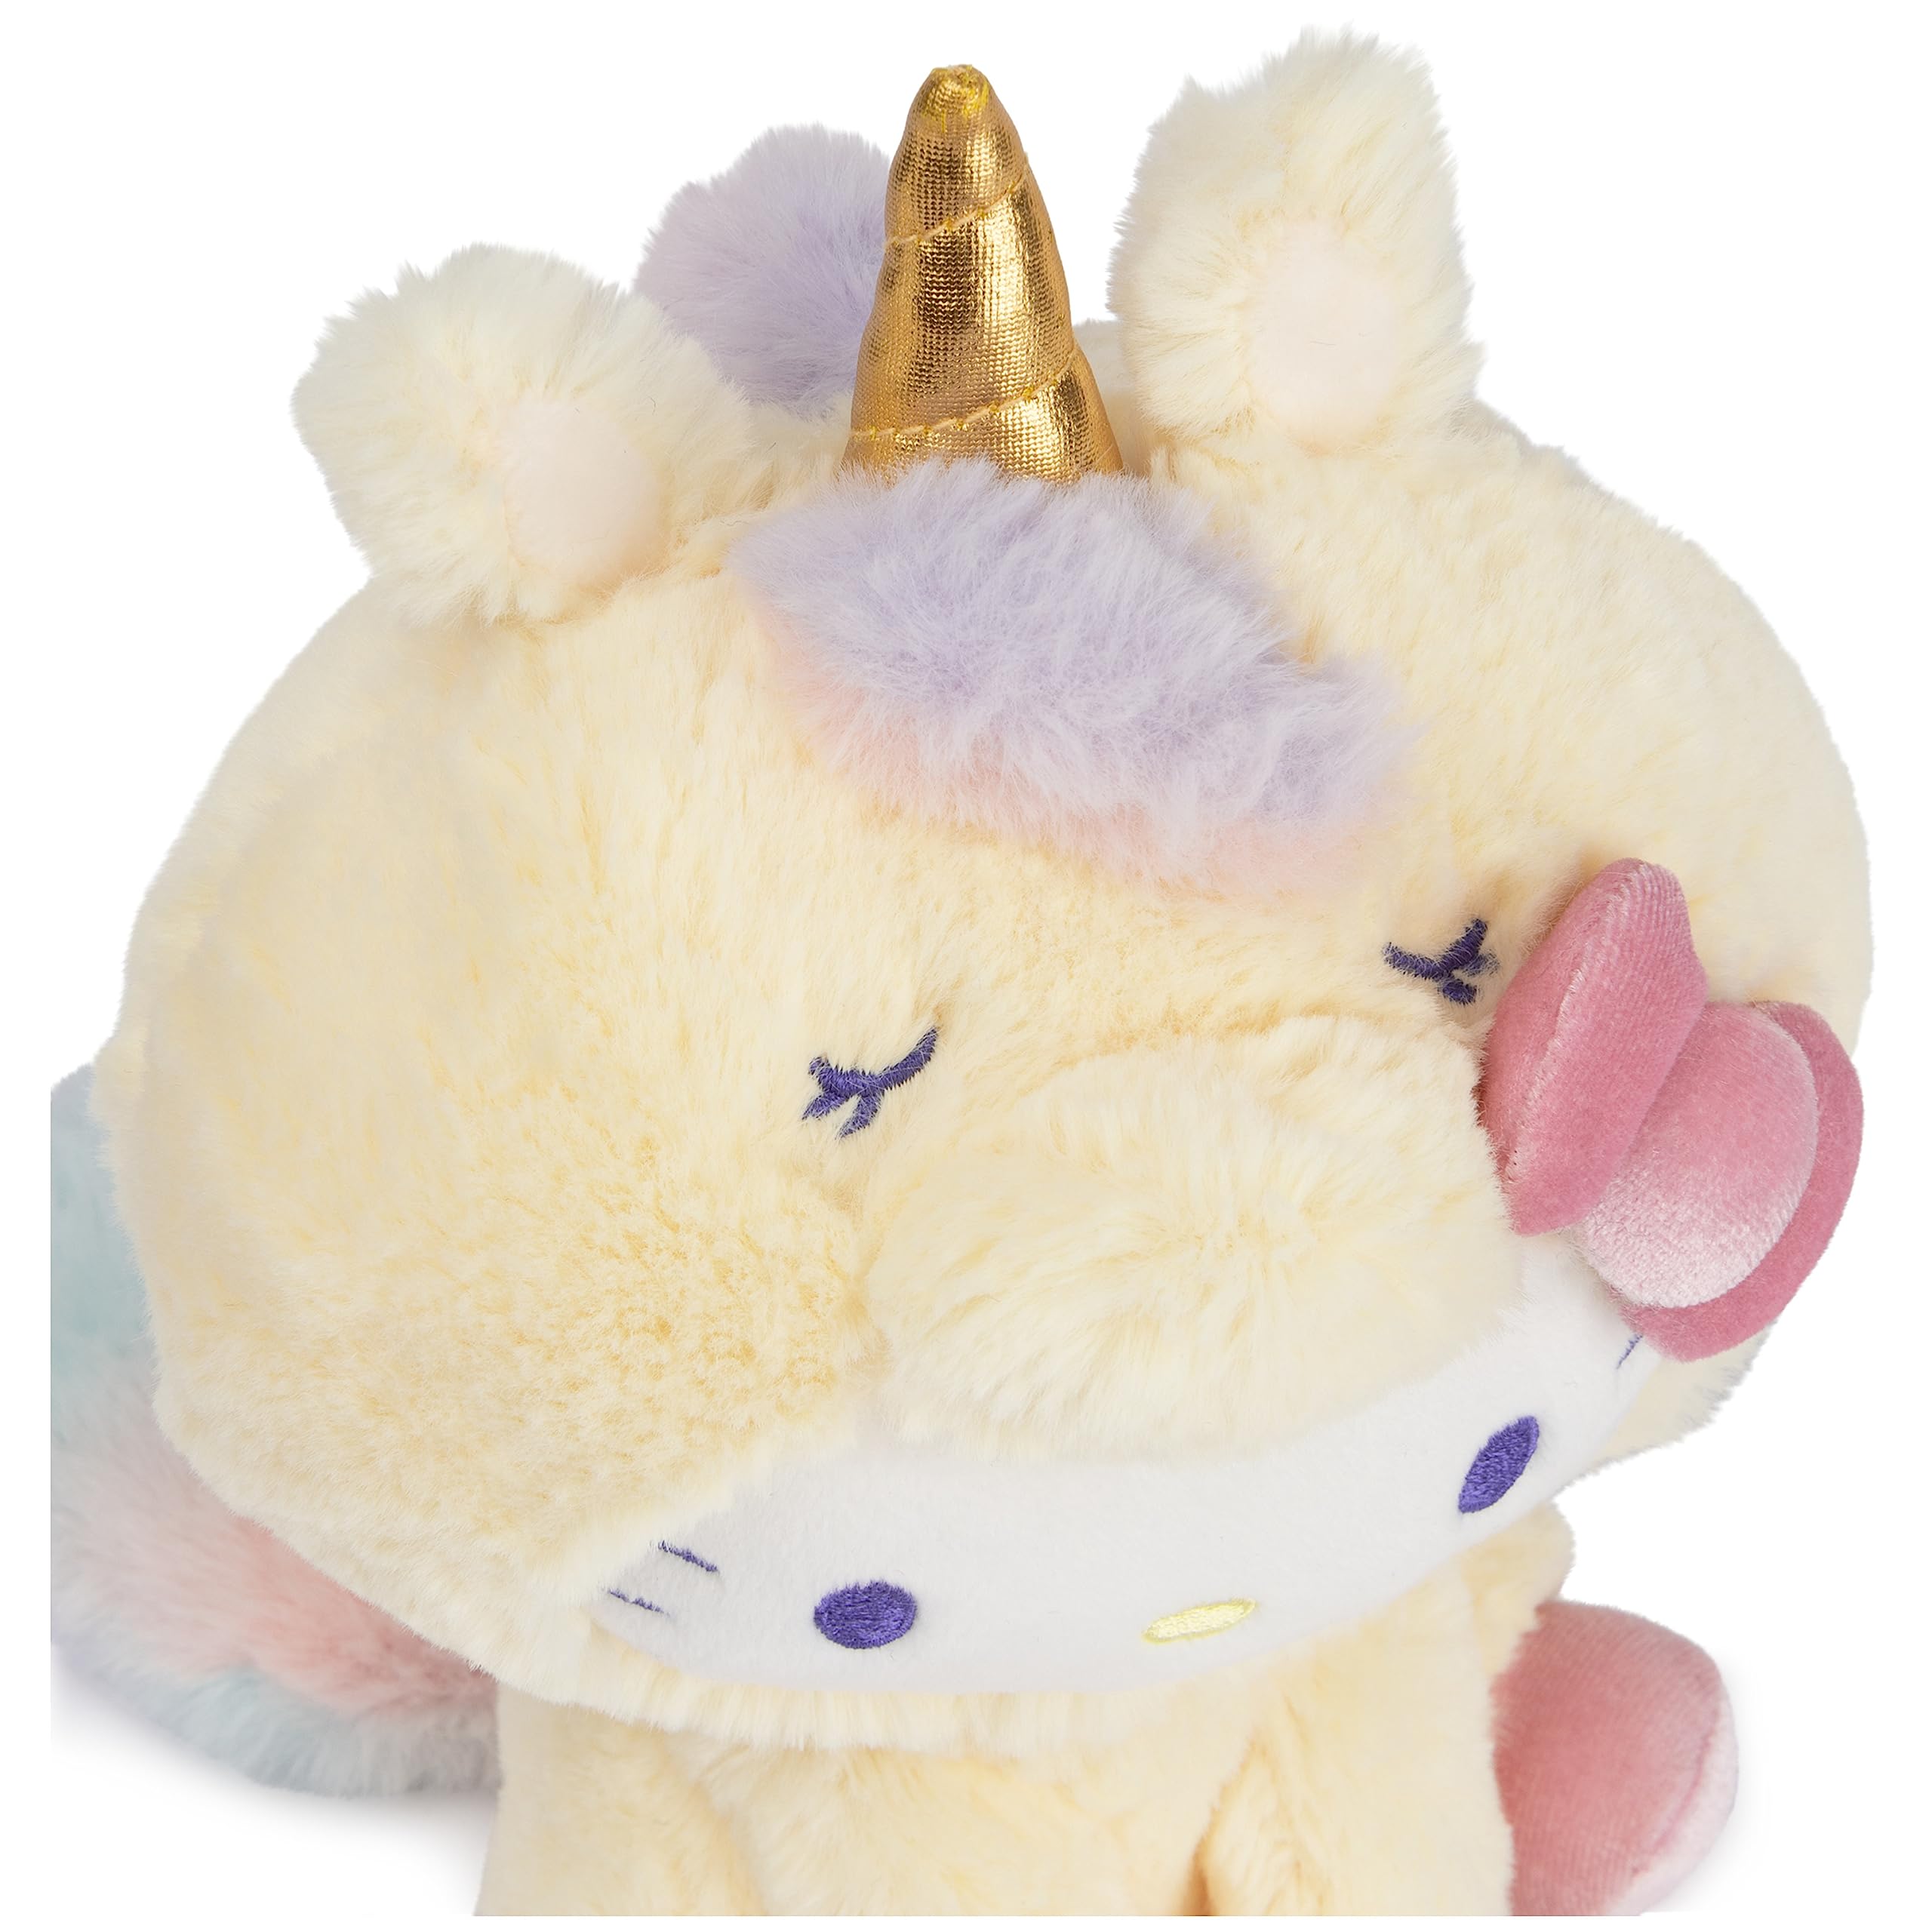 GUND Sanrio Hello Kitty Unicorn Plush Toy, Premium Stuffed Animal for Ages 1 and Up, Yellow, 6”